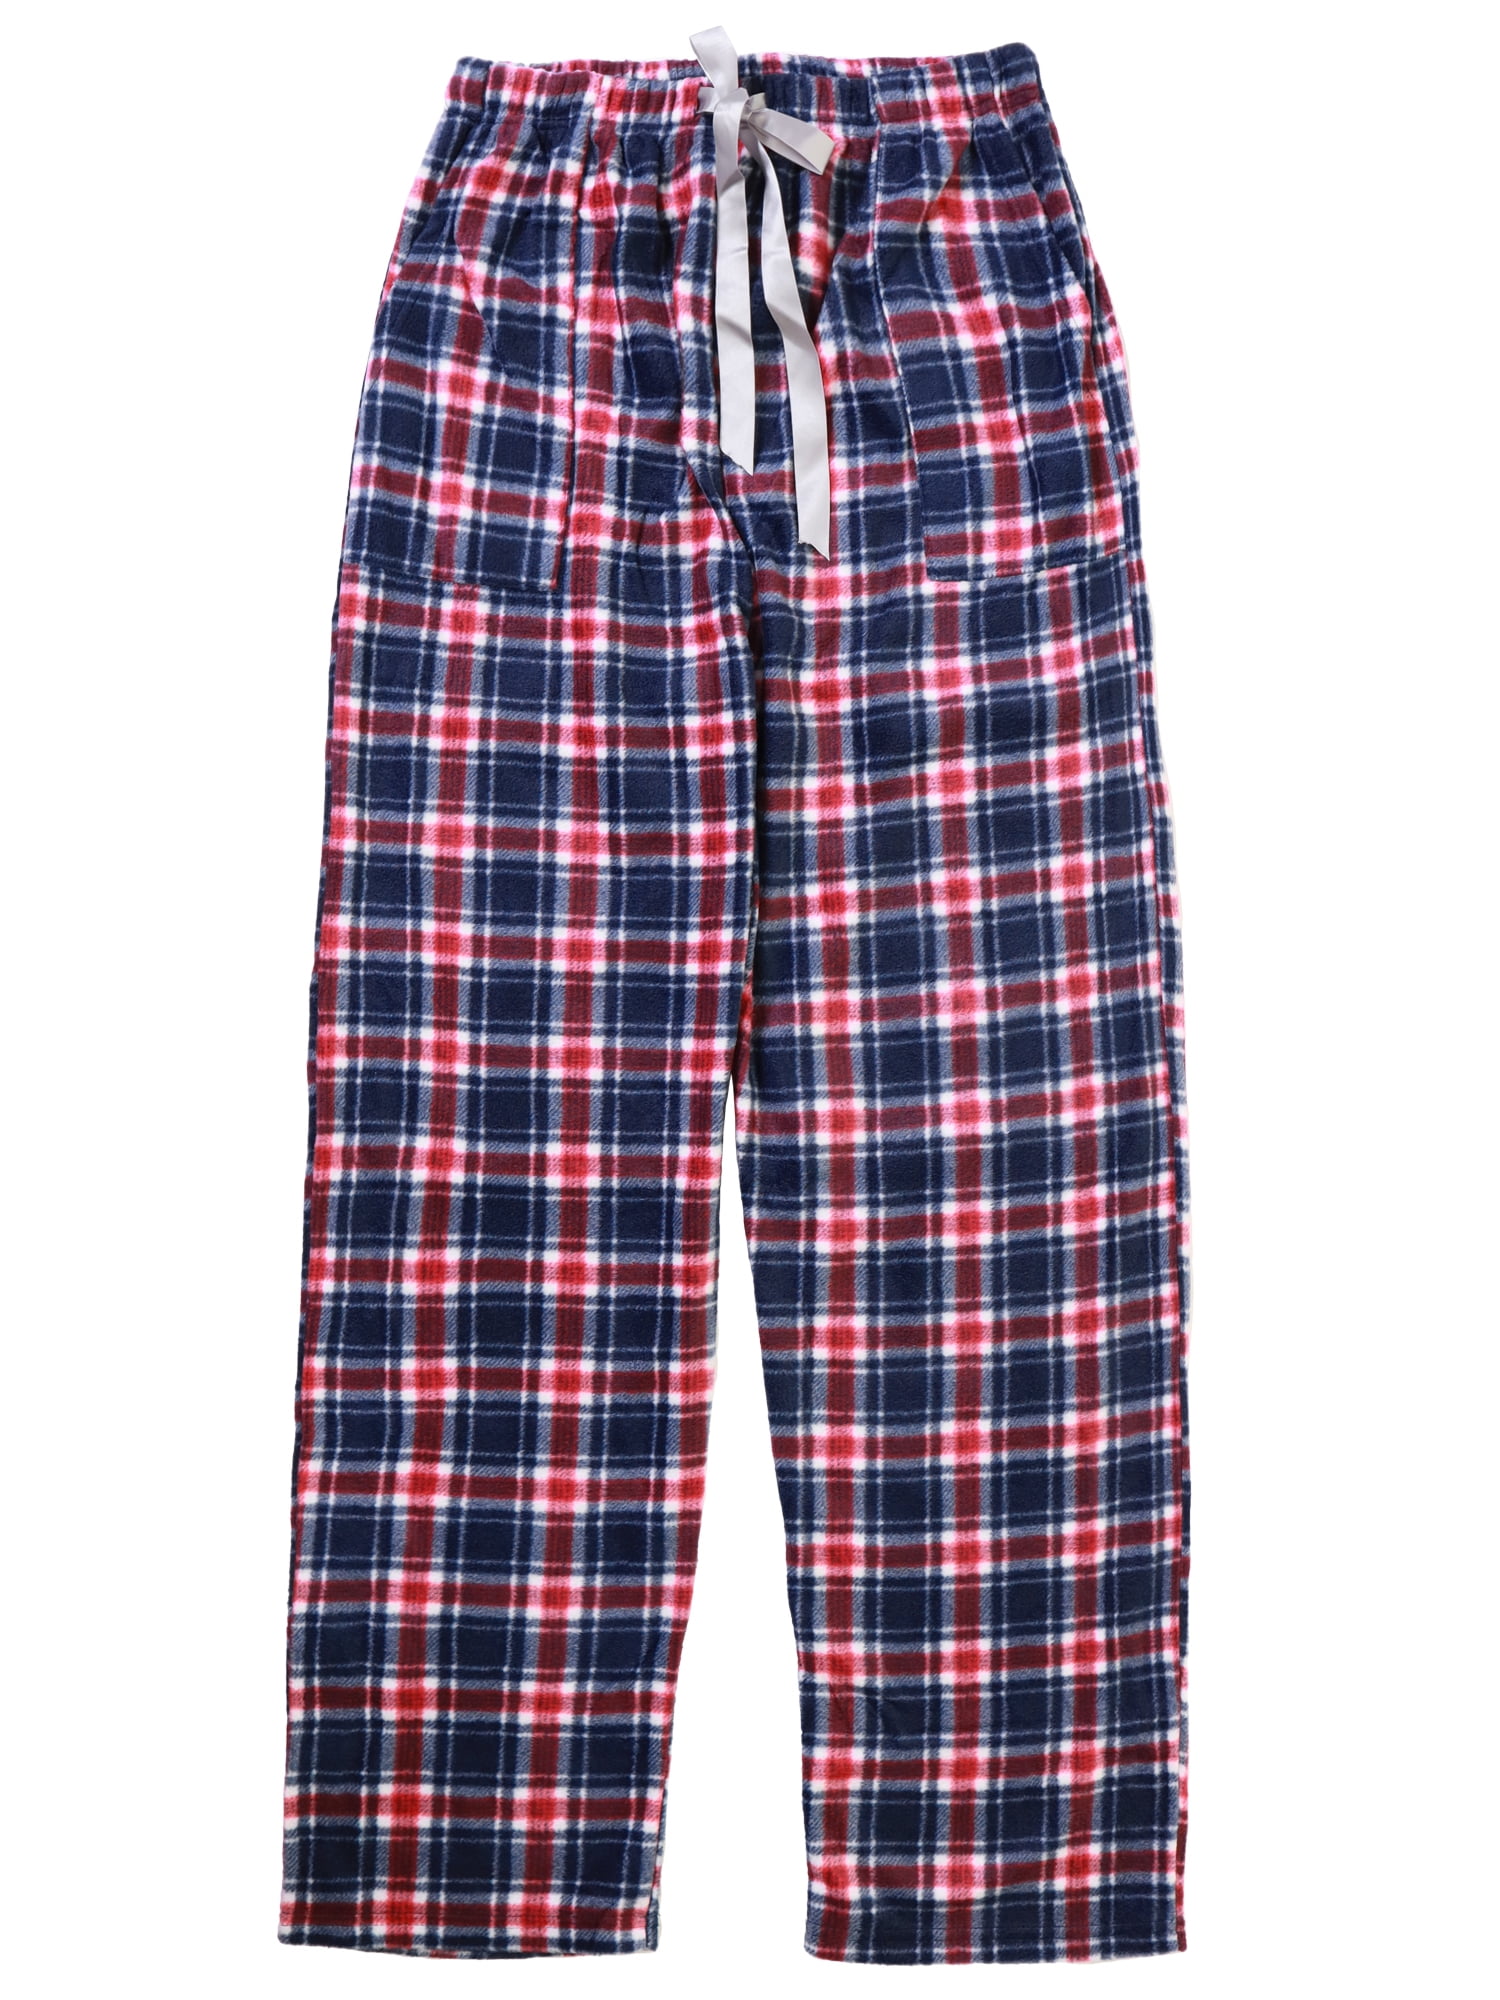 Espada Menswear Men's COZY Fleece Pajama Pants (1 Pack) - Walmart.com